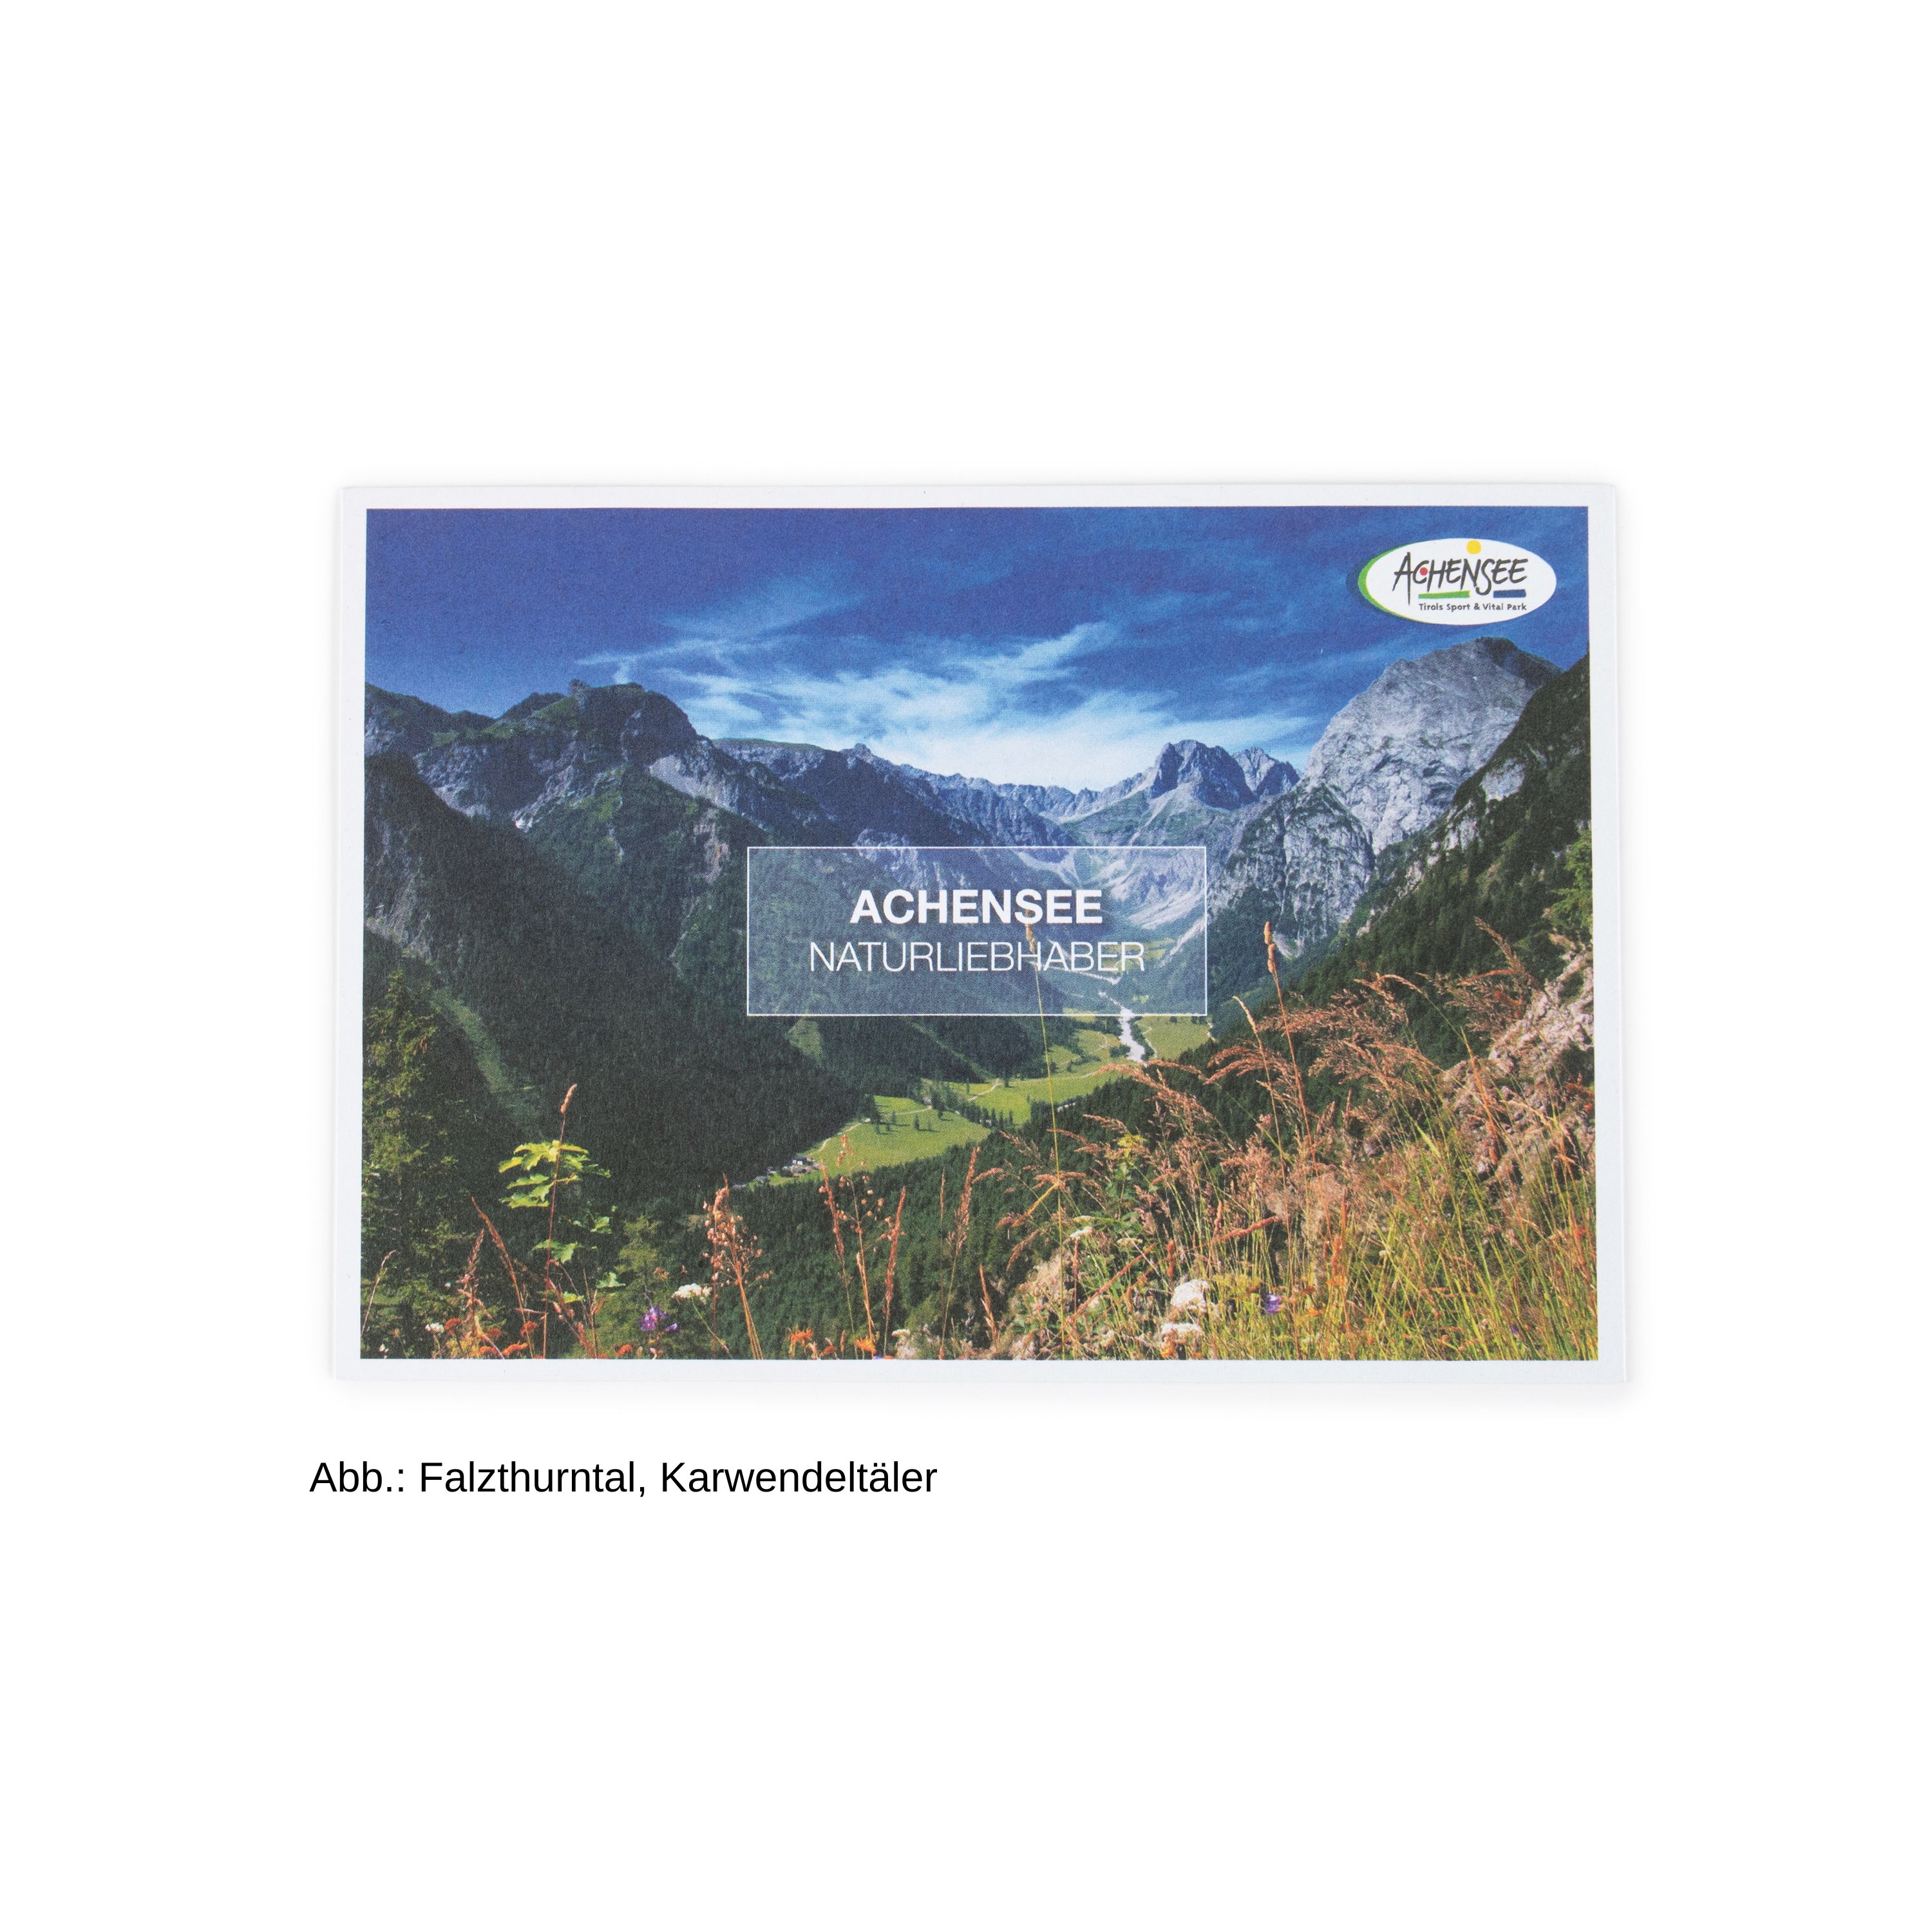 Postkarte des Falzthurntals im Karwendelgebirge